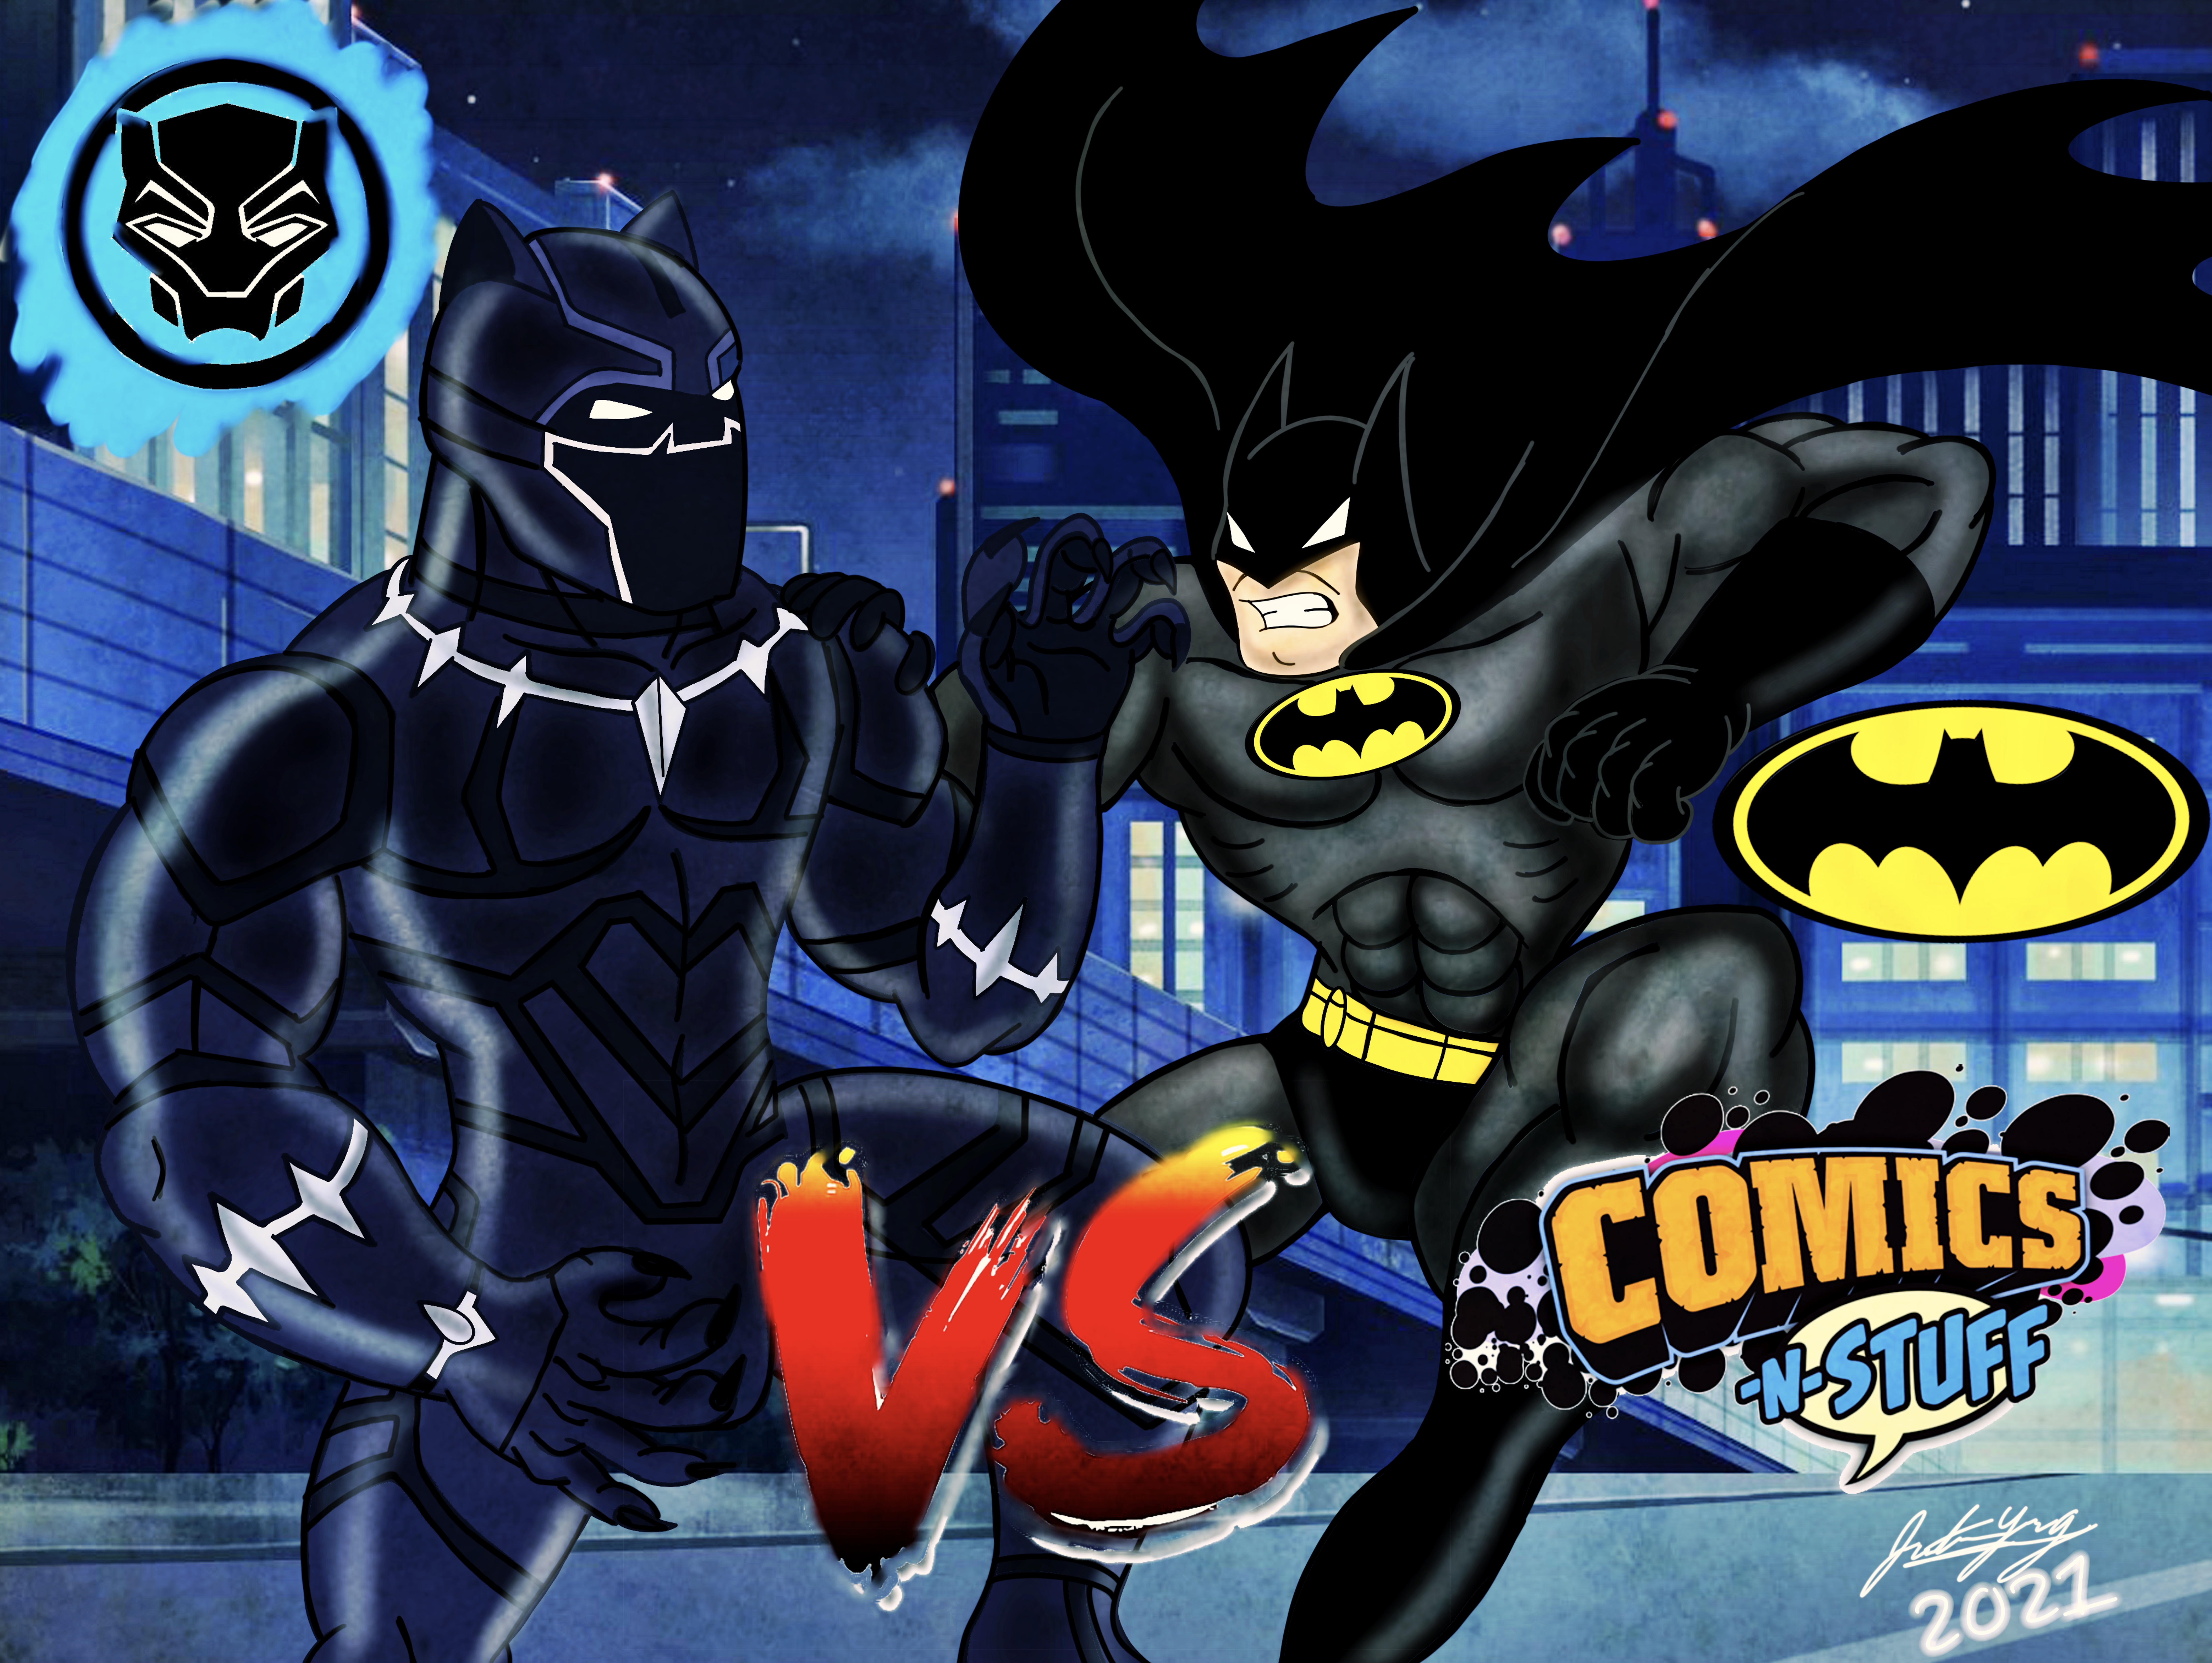 Dark Knight Batman vs Black Panther by Yingcartoonman on DeviantArt